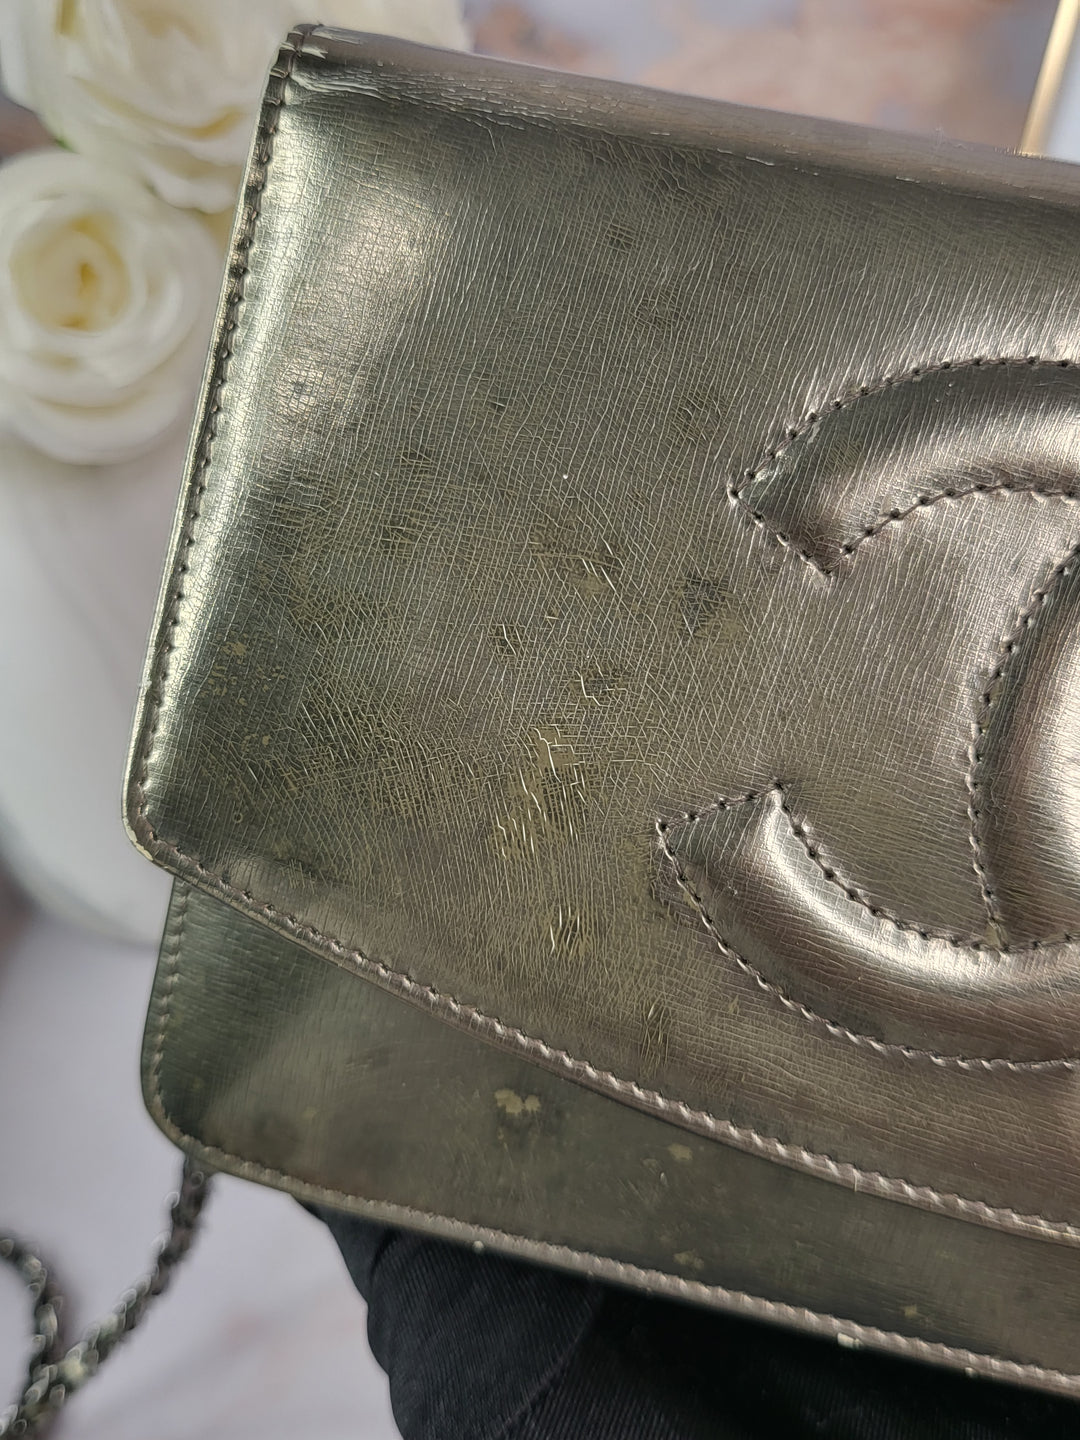 Chanel Metallic Wallet On Chain